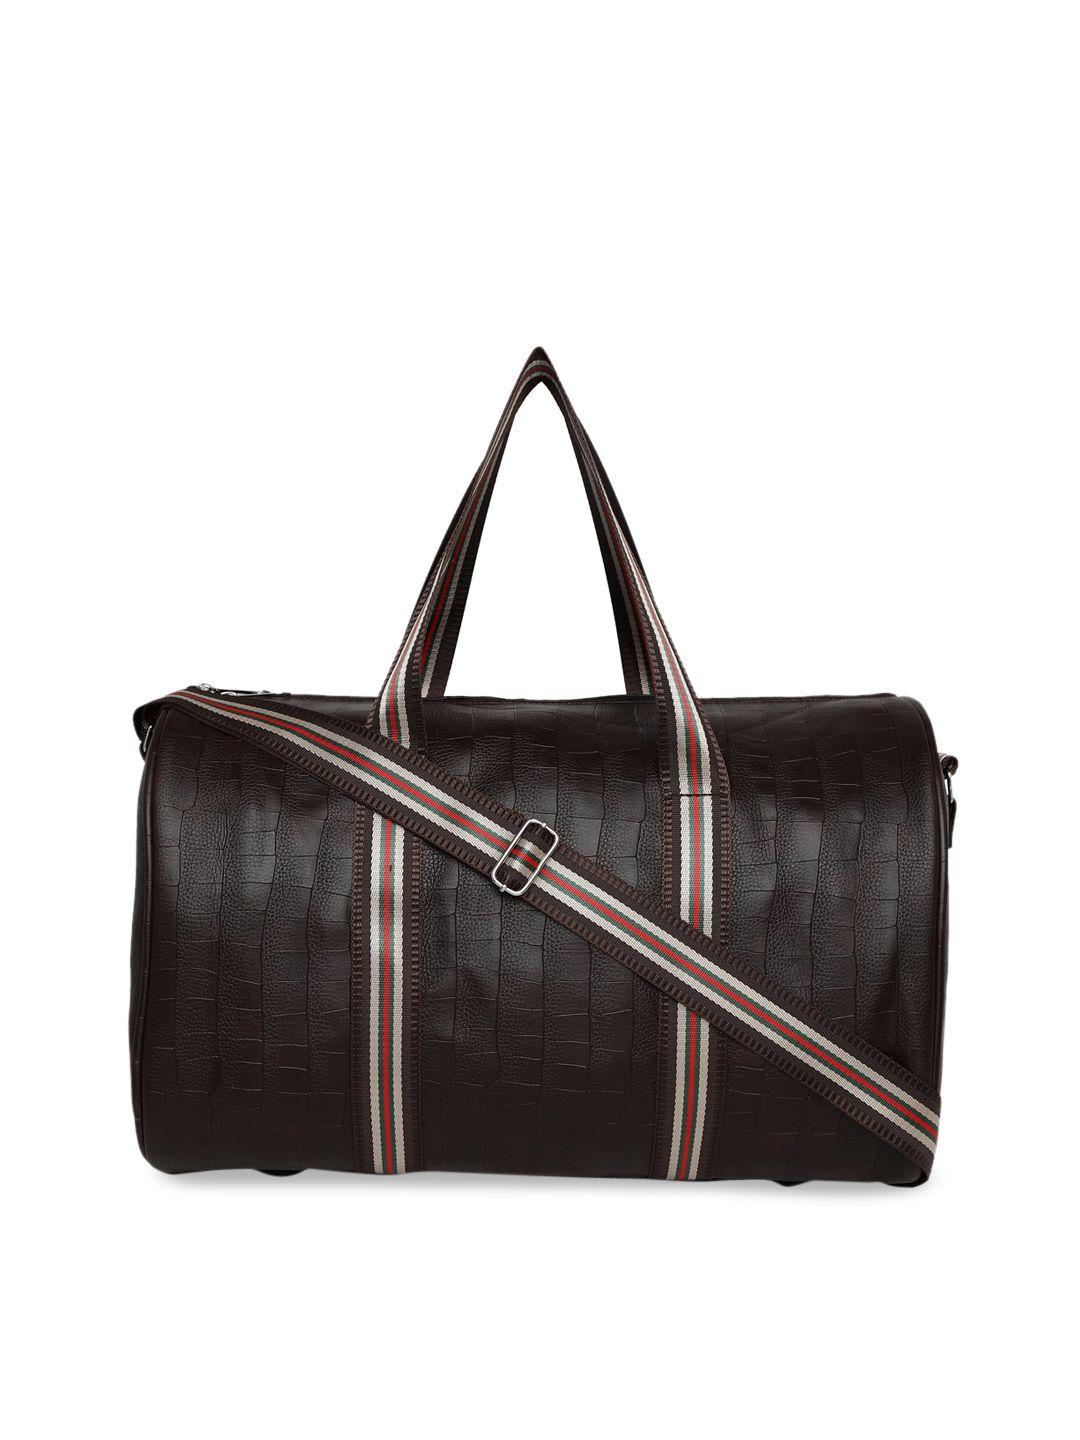 mboss unisex brown textured faux leather medium duffel bag